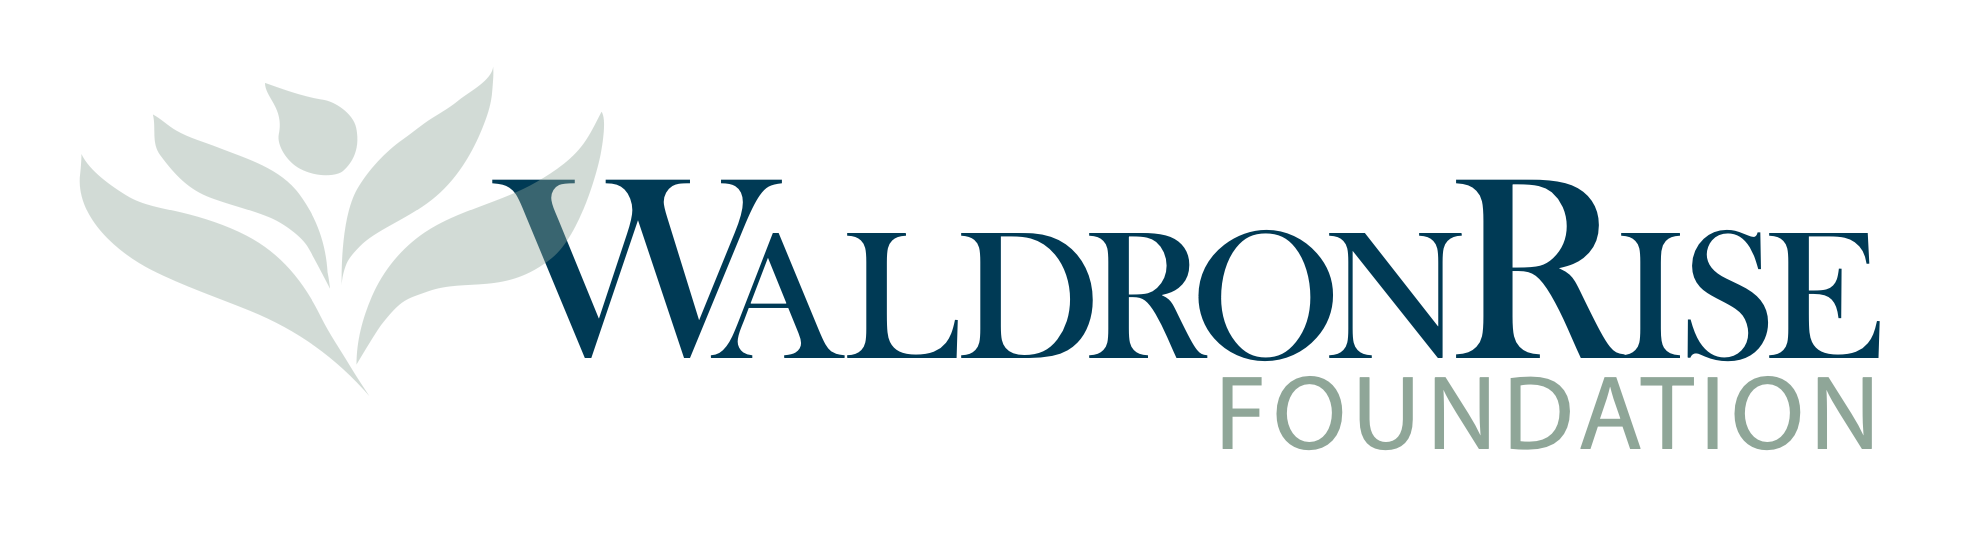 Waldron Rise Foundation